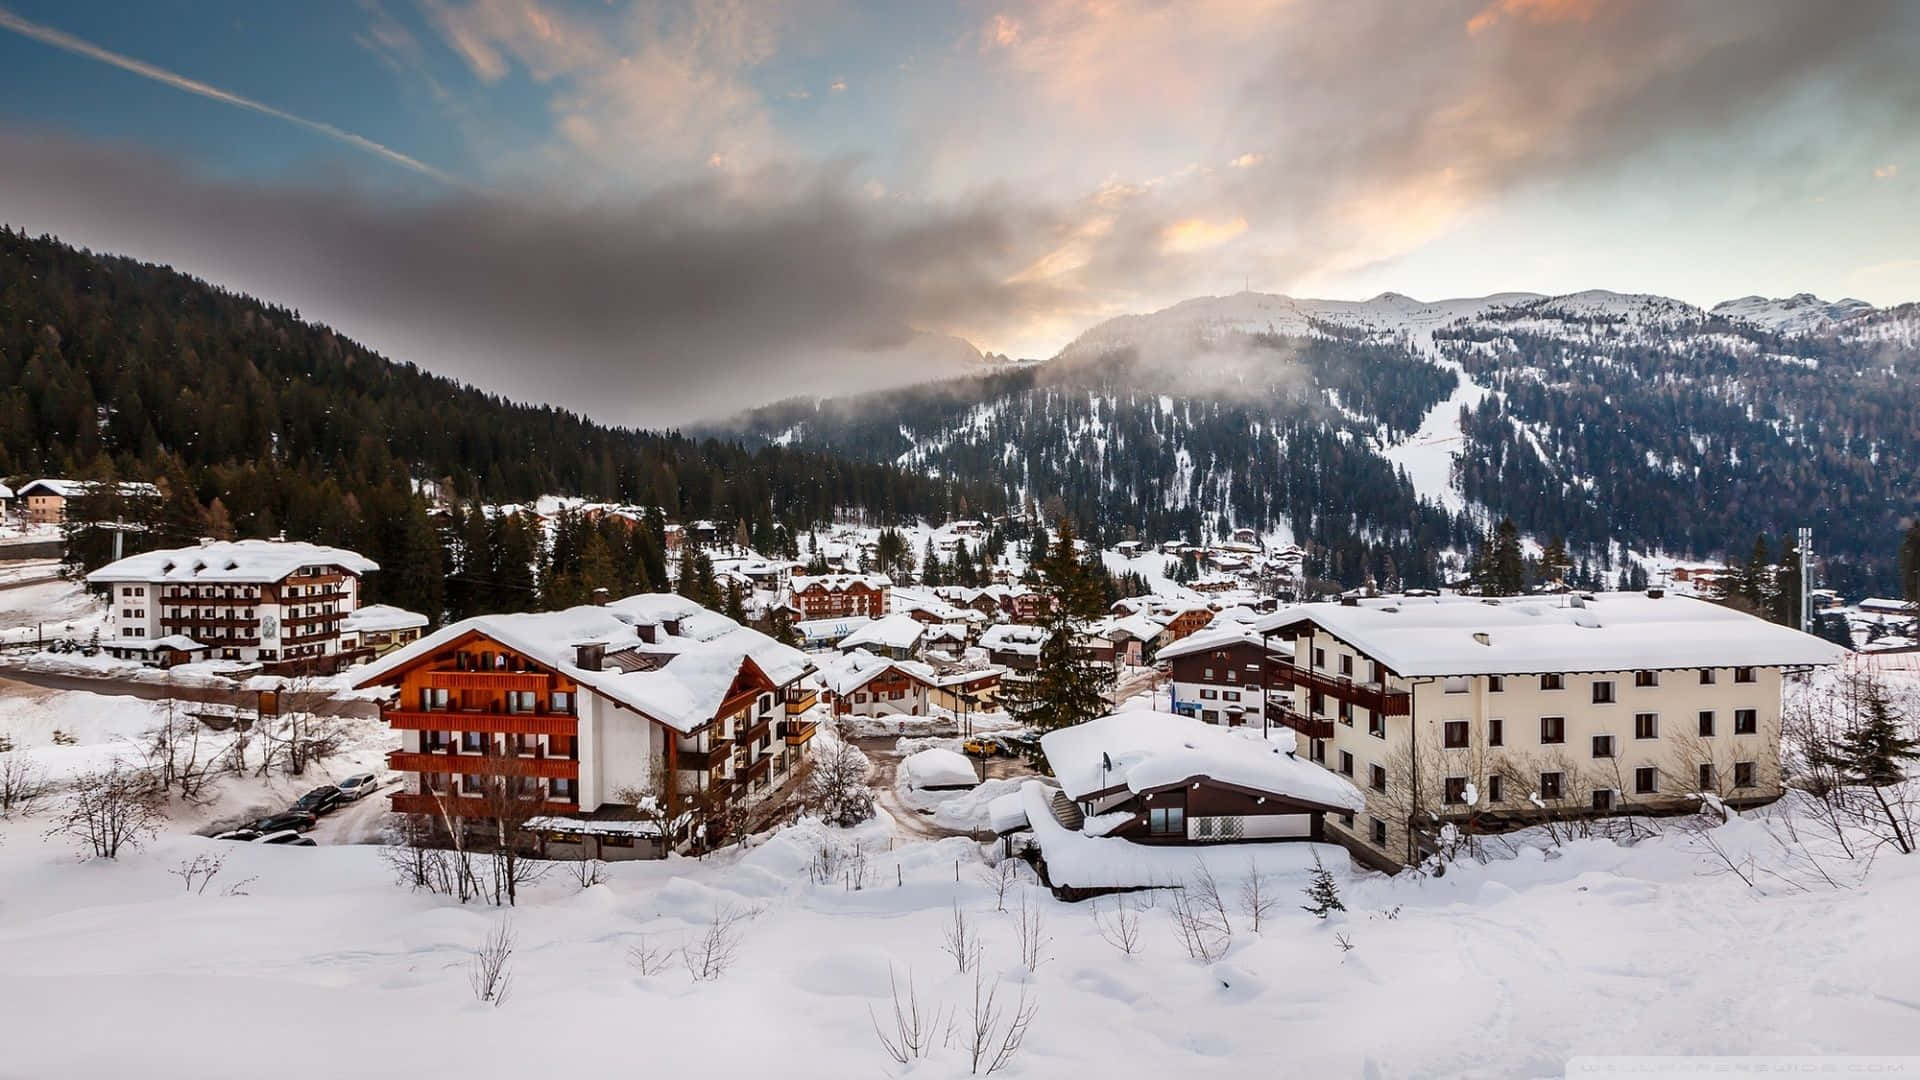 Enchanting Snowy Village during Winter Season Wallpaper